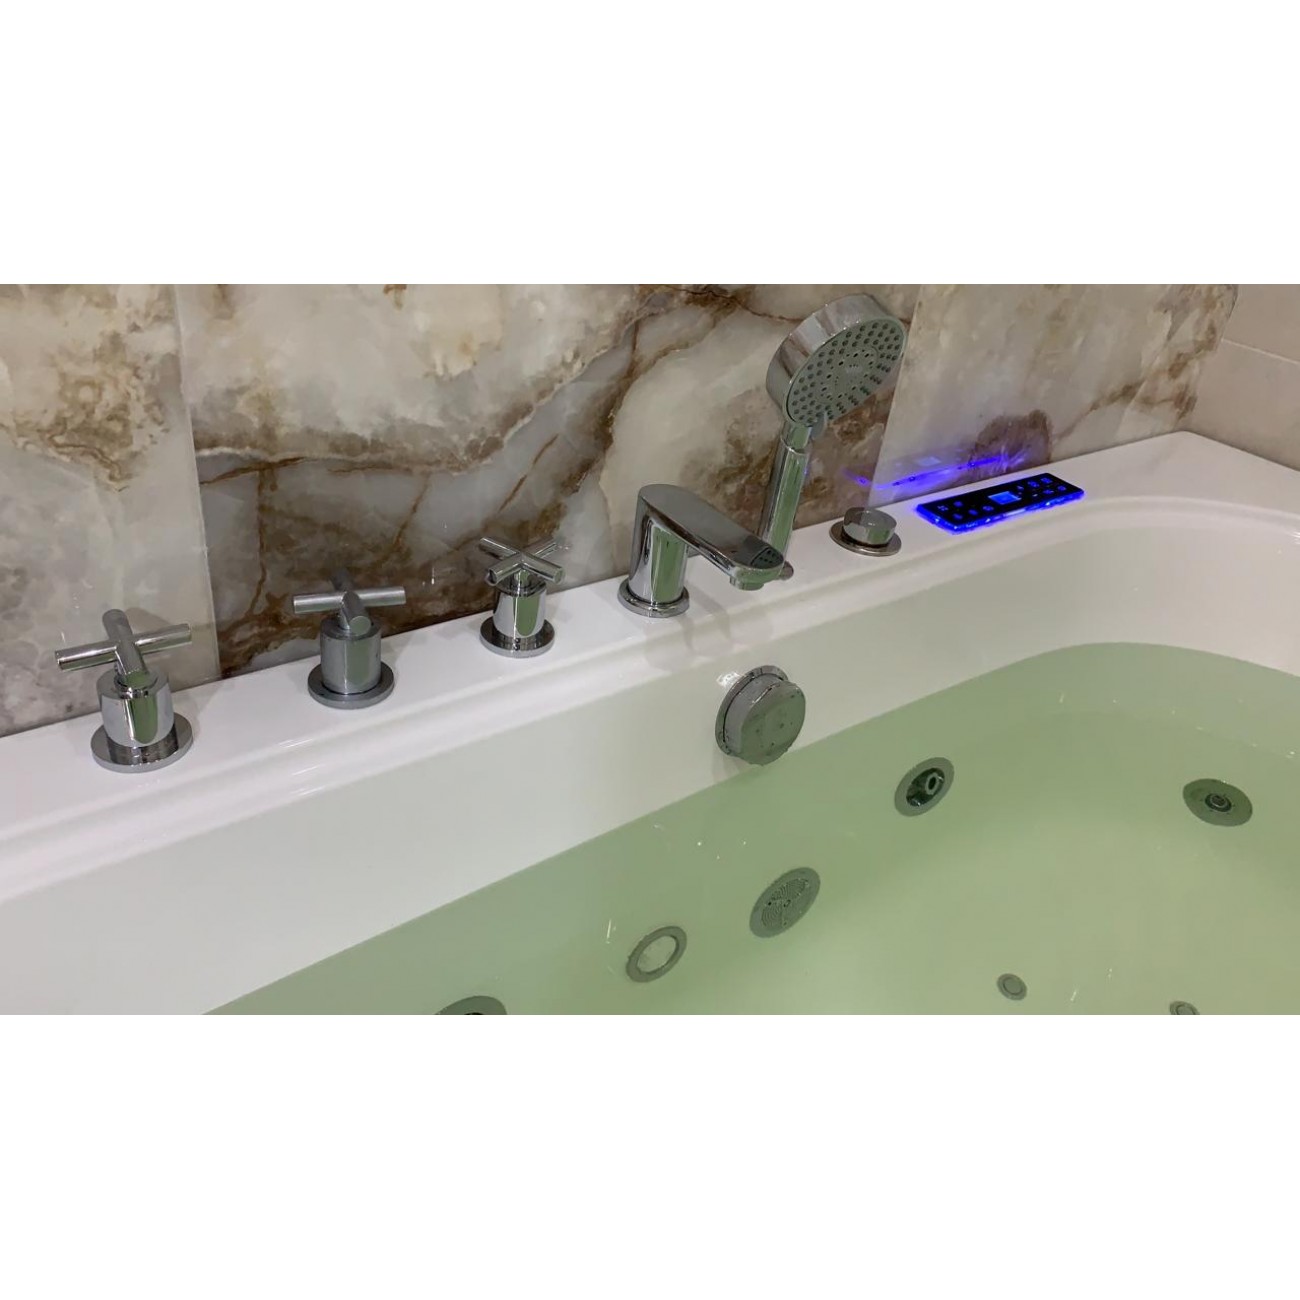 Гидромассажная ванна Frank 170x80 F160 пристенная, белая, размер 170x80, цвет белый 20156060 - фото 3